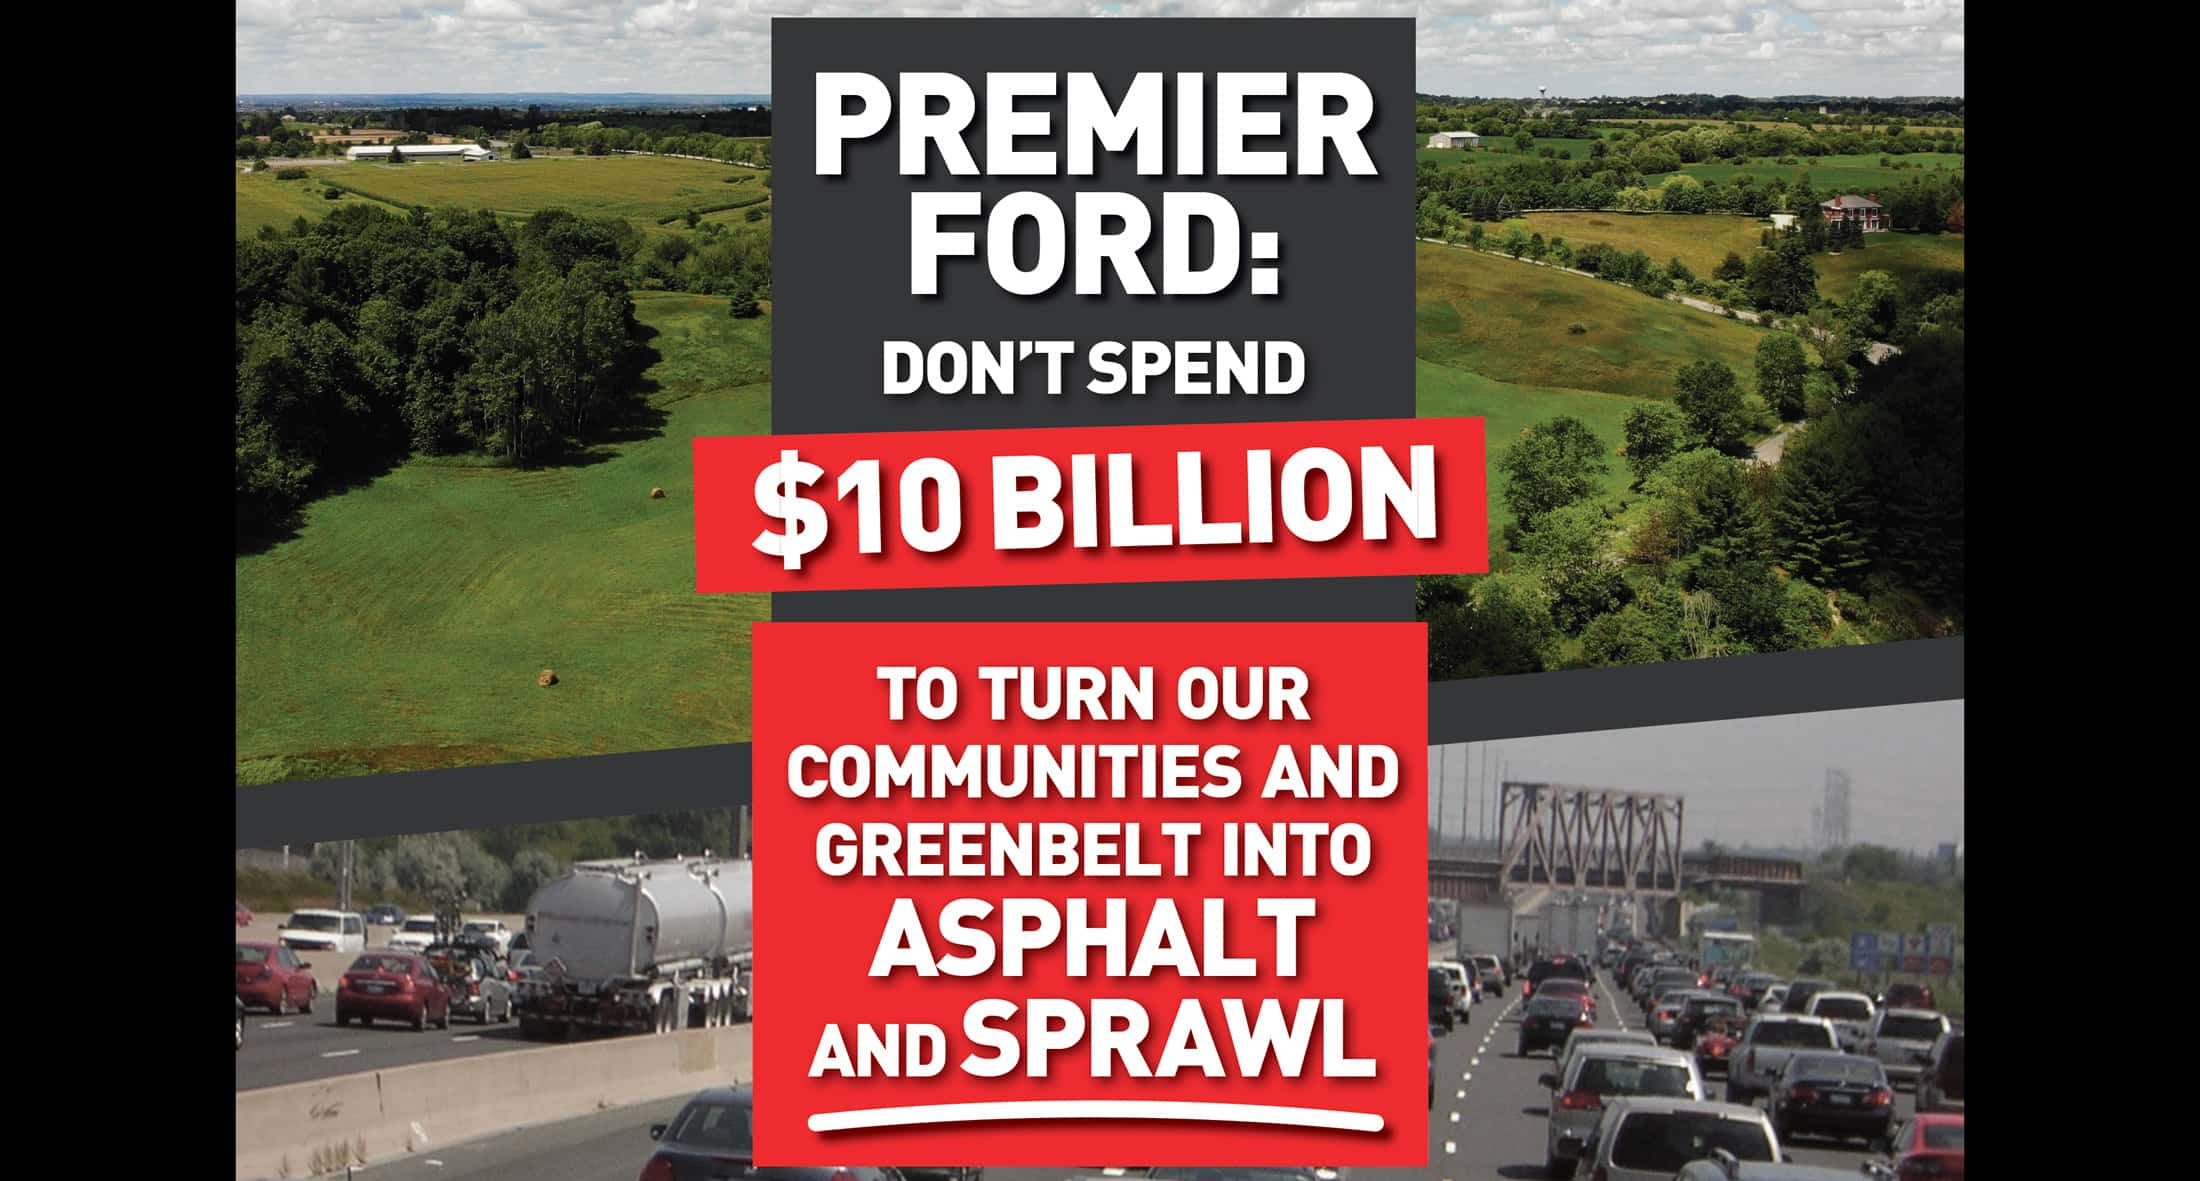 Premier Ford: Don't spend $10 Billion